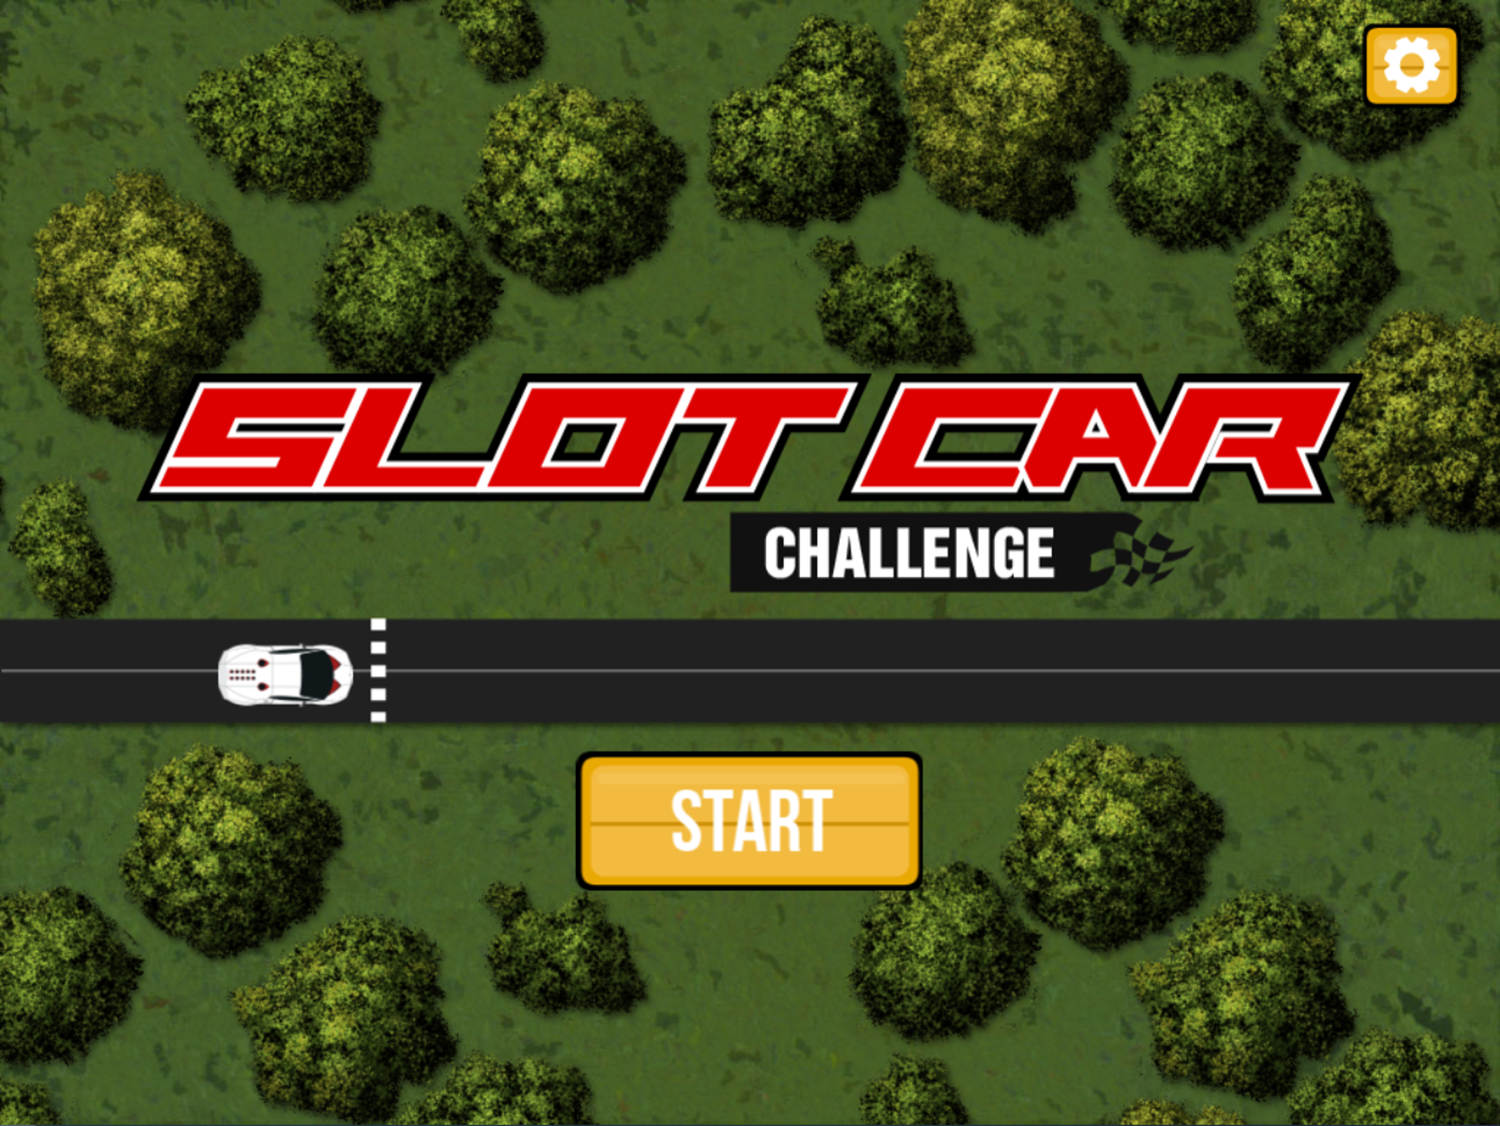 Slot Car Challenge Game Welcome Screen Screenshot.